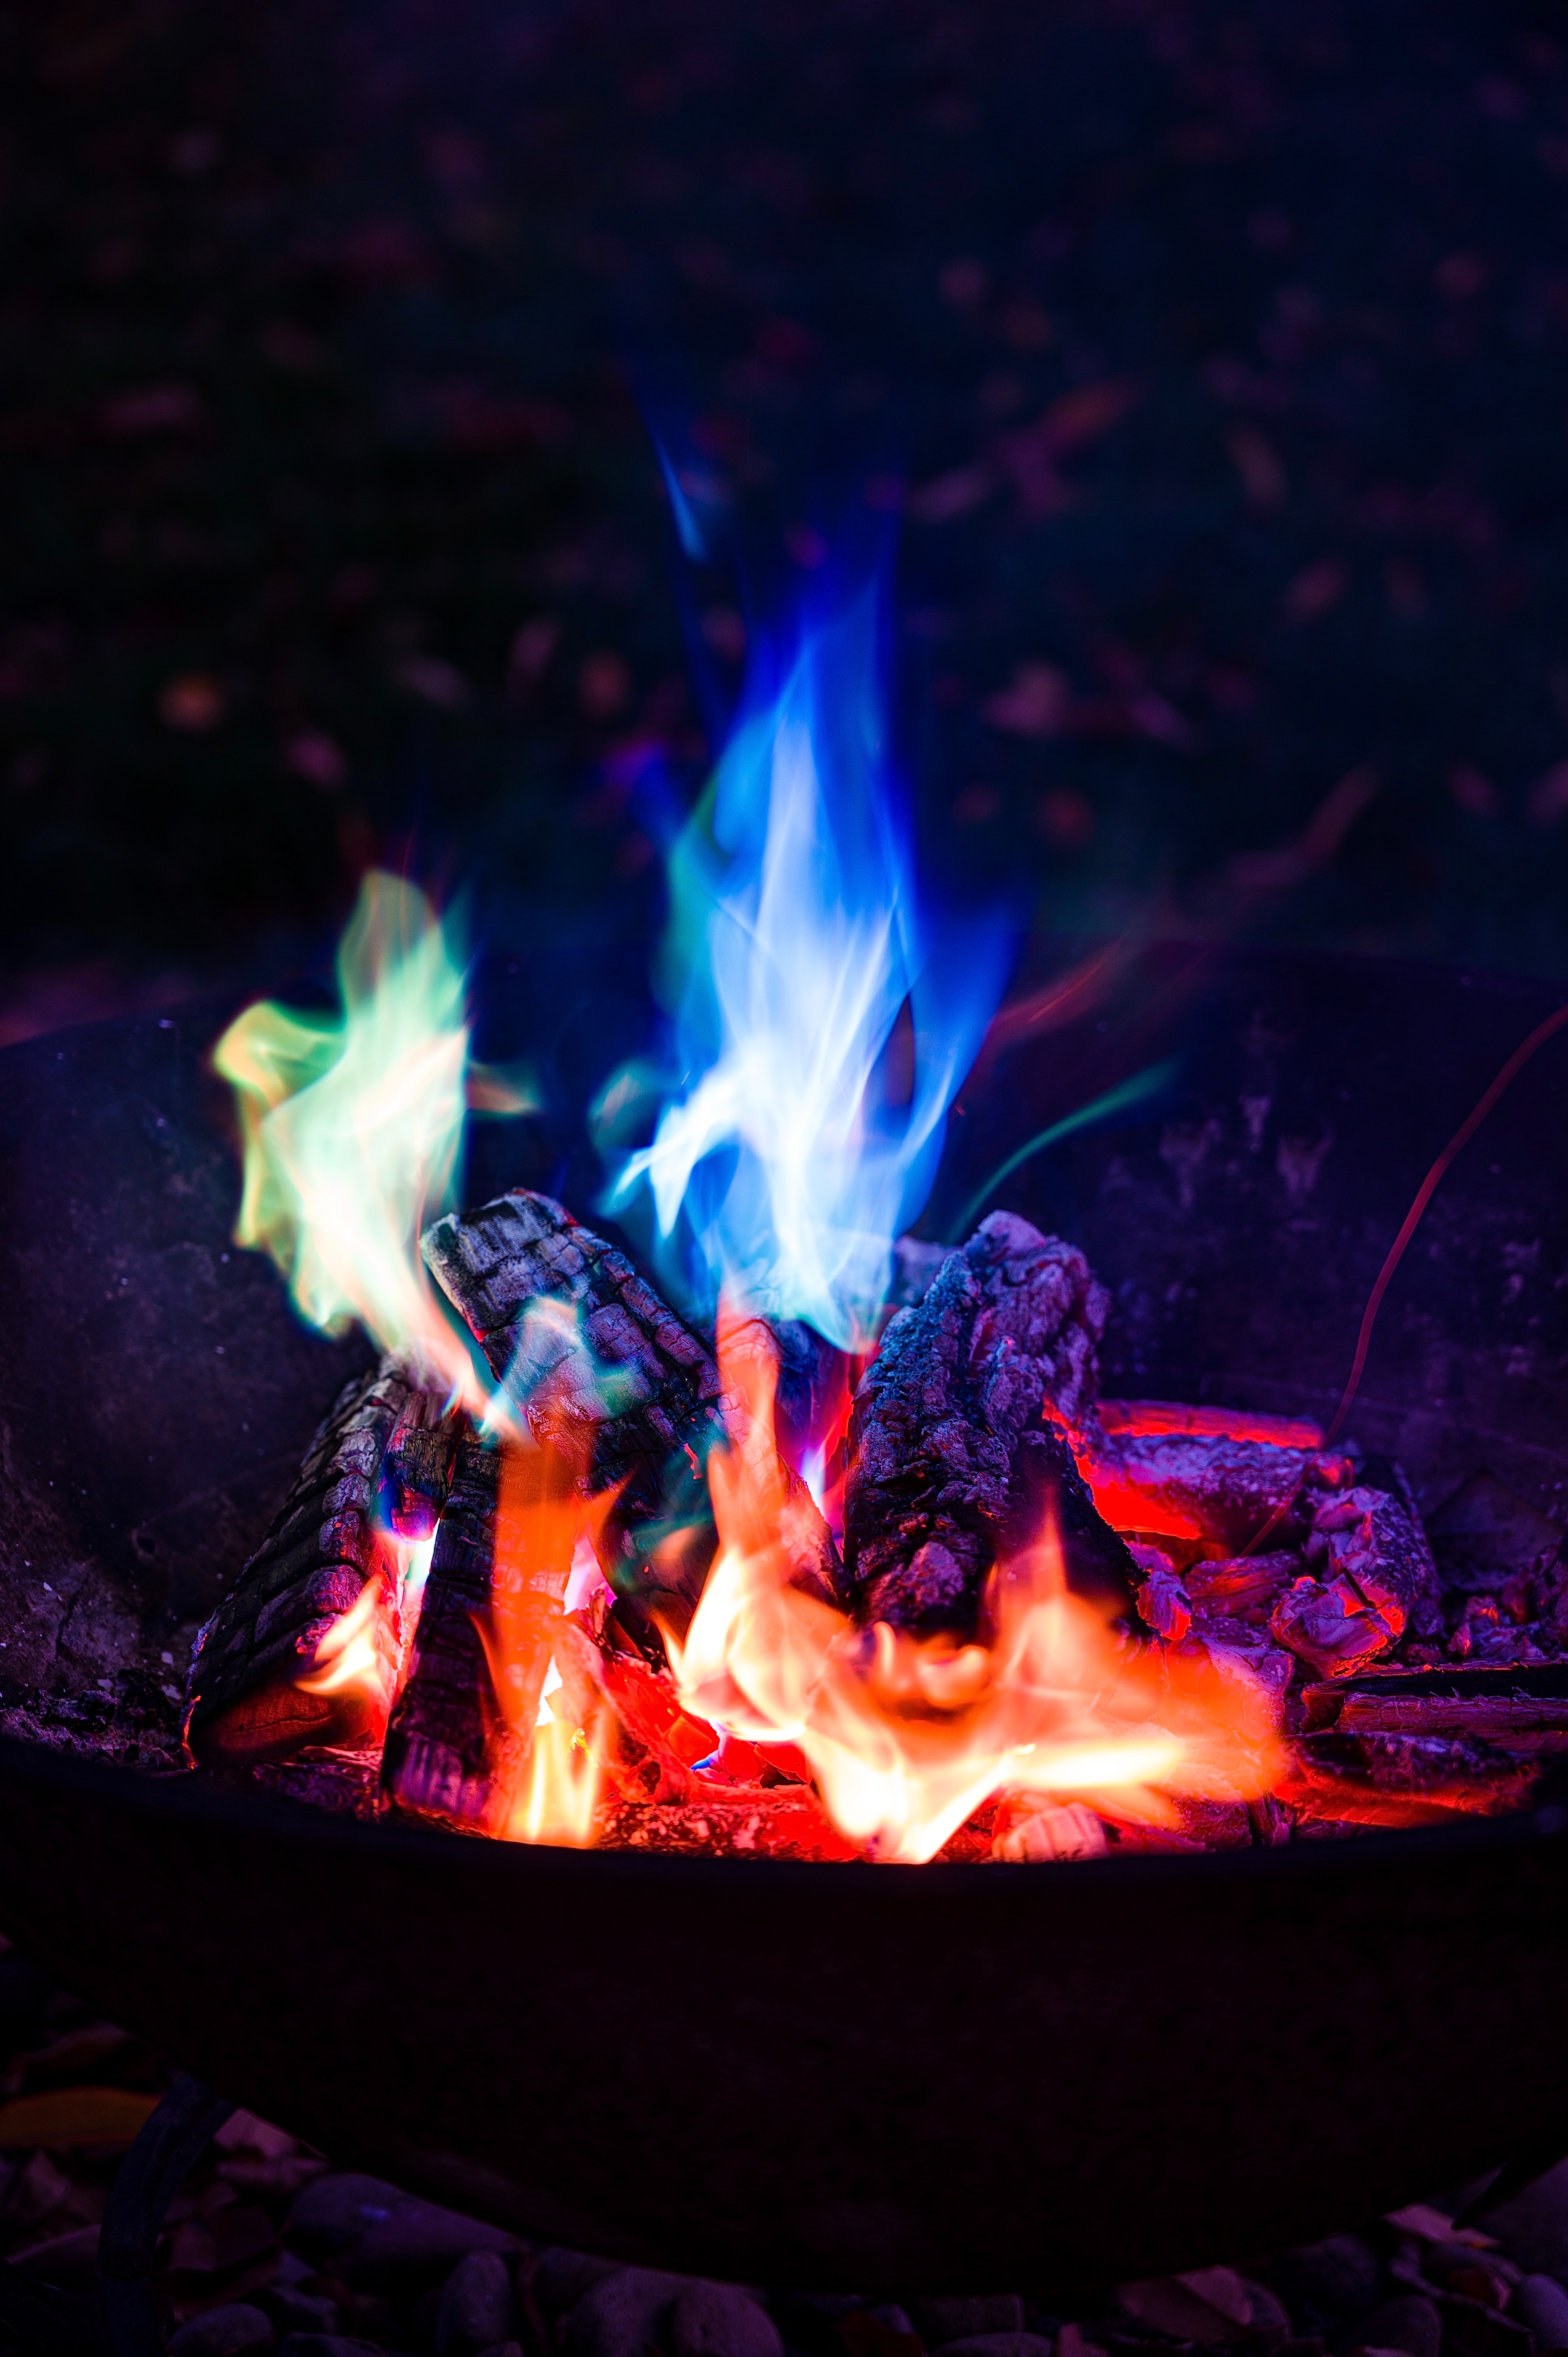 dark, bonfire, campsite, camping, fire, night, flame